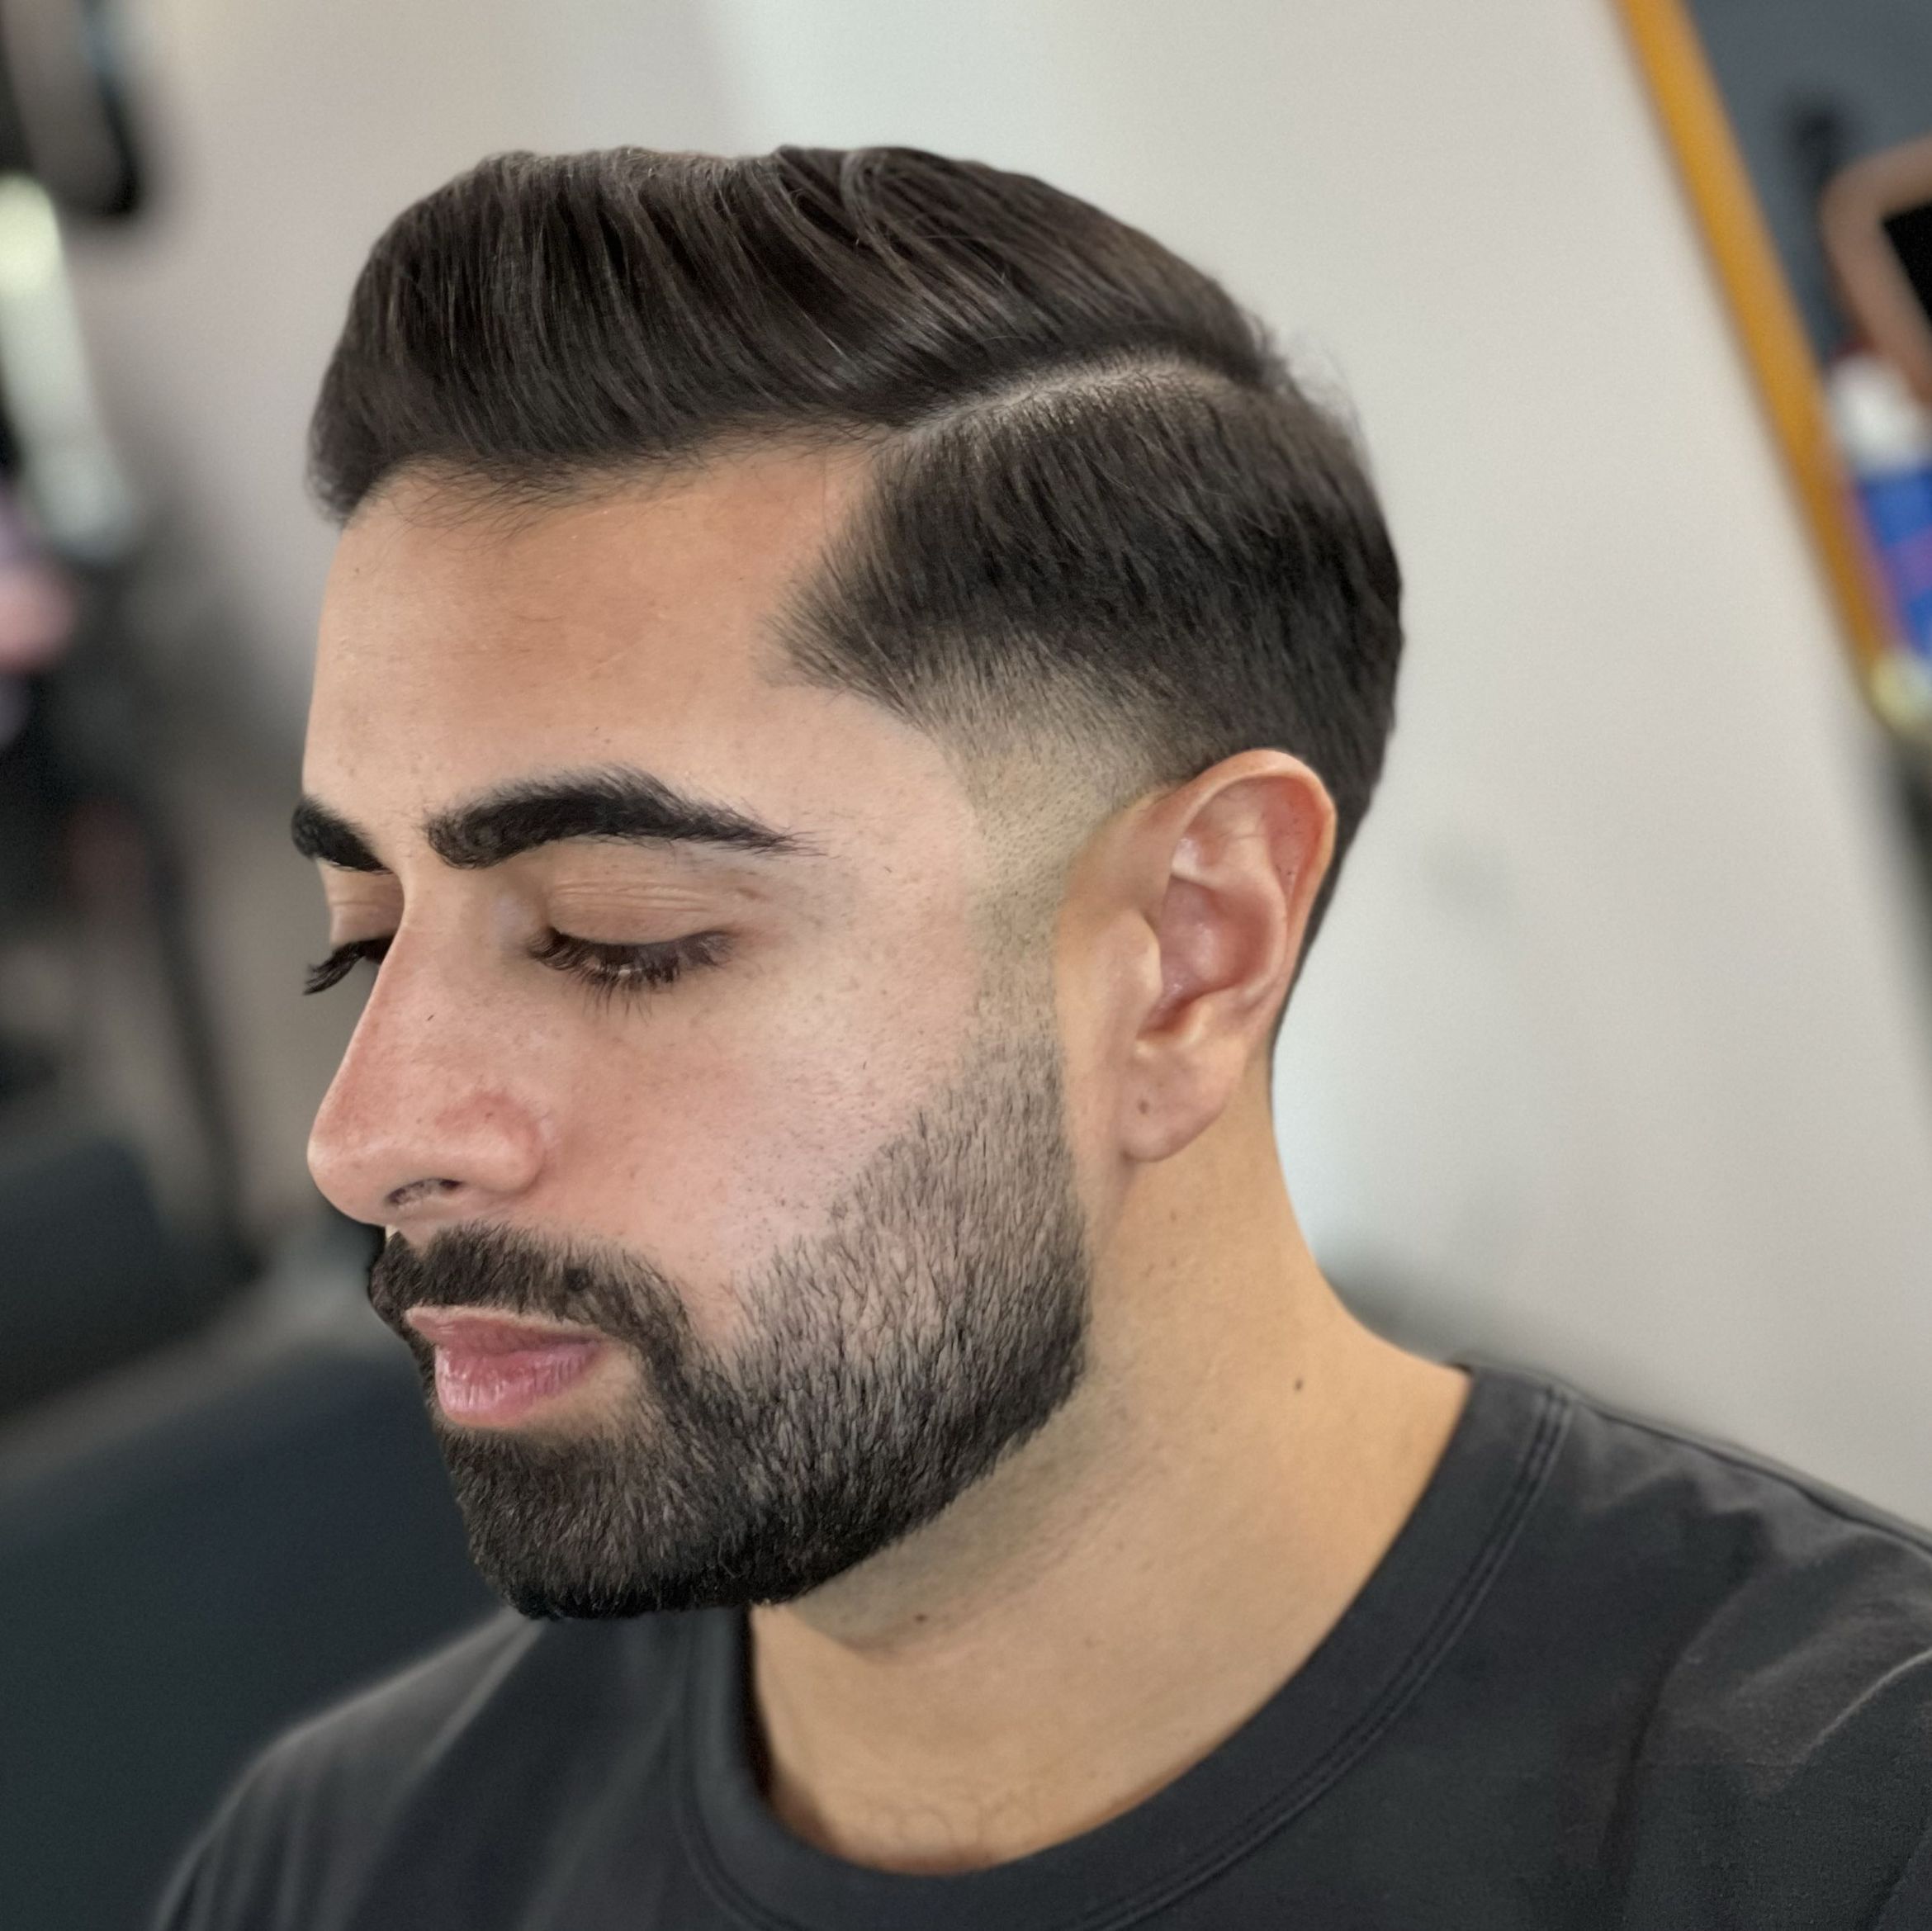 Haircut+basic beard service portfolio